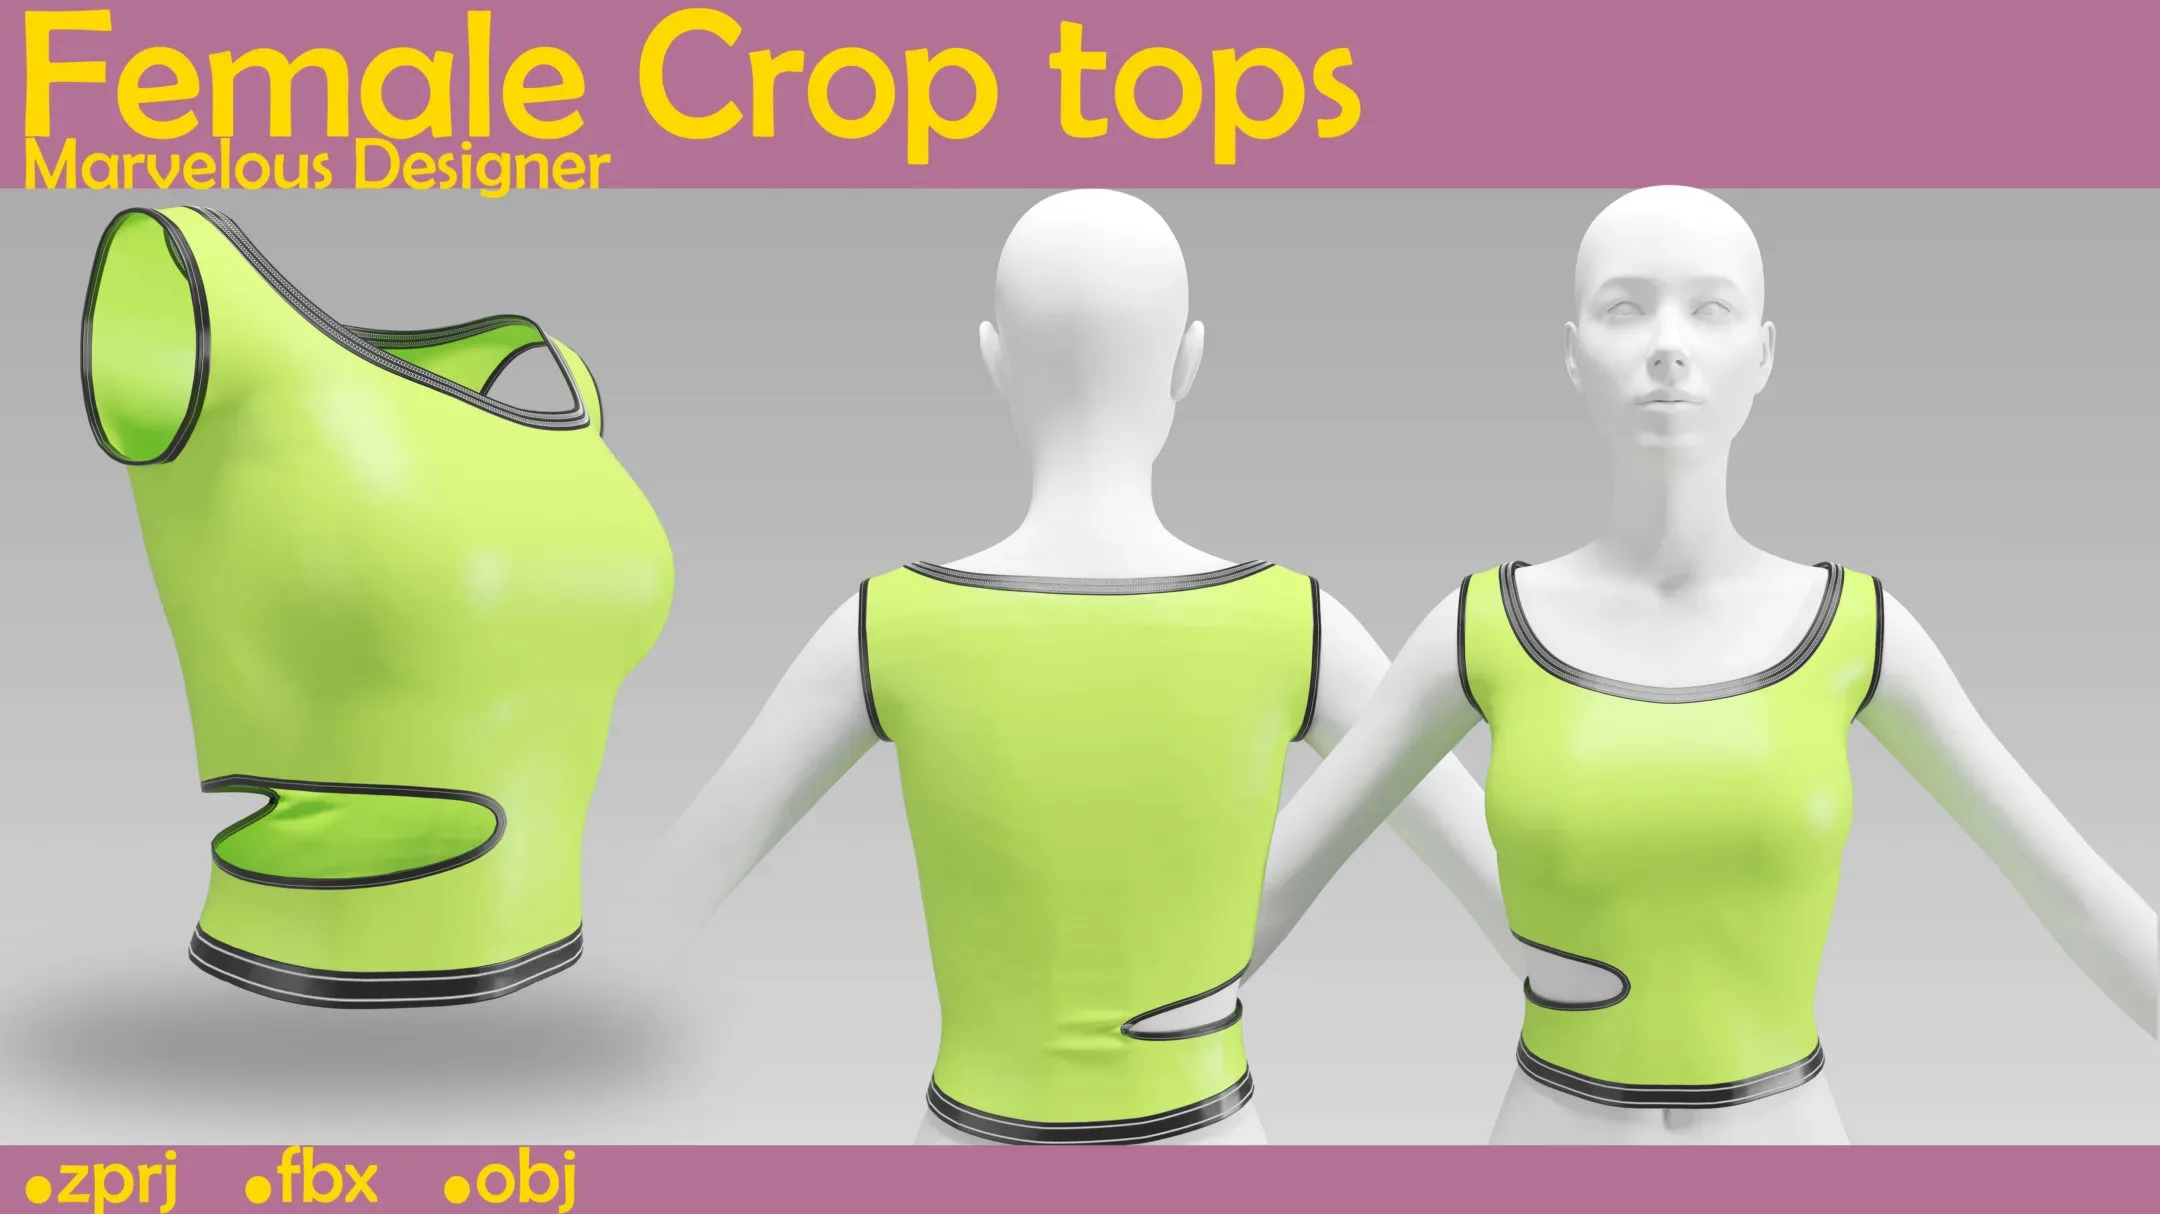 Female Crop tops.Marvelous Designer